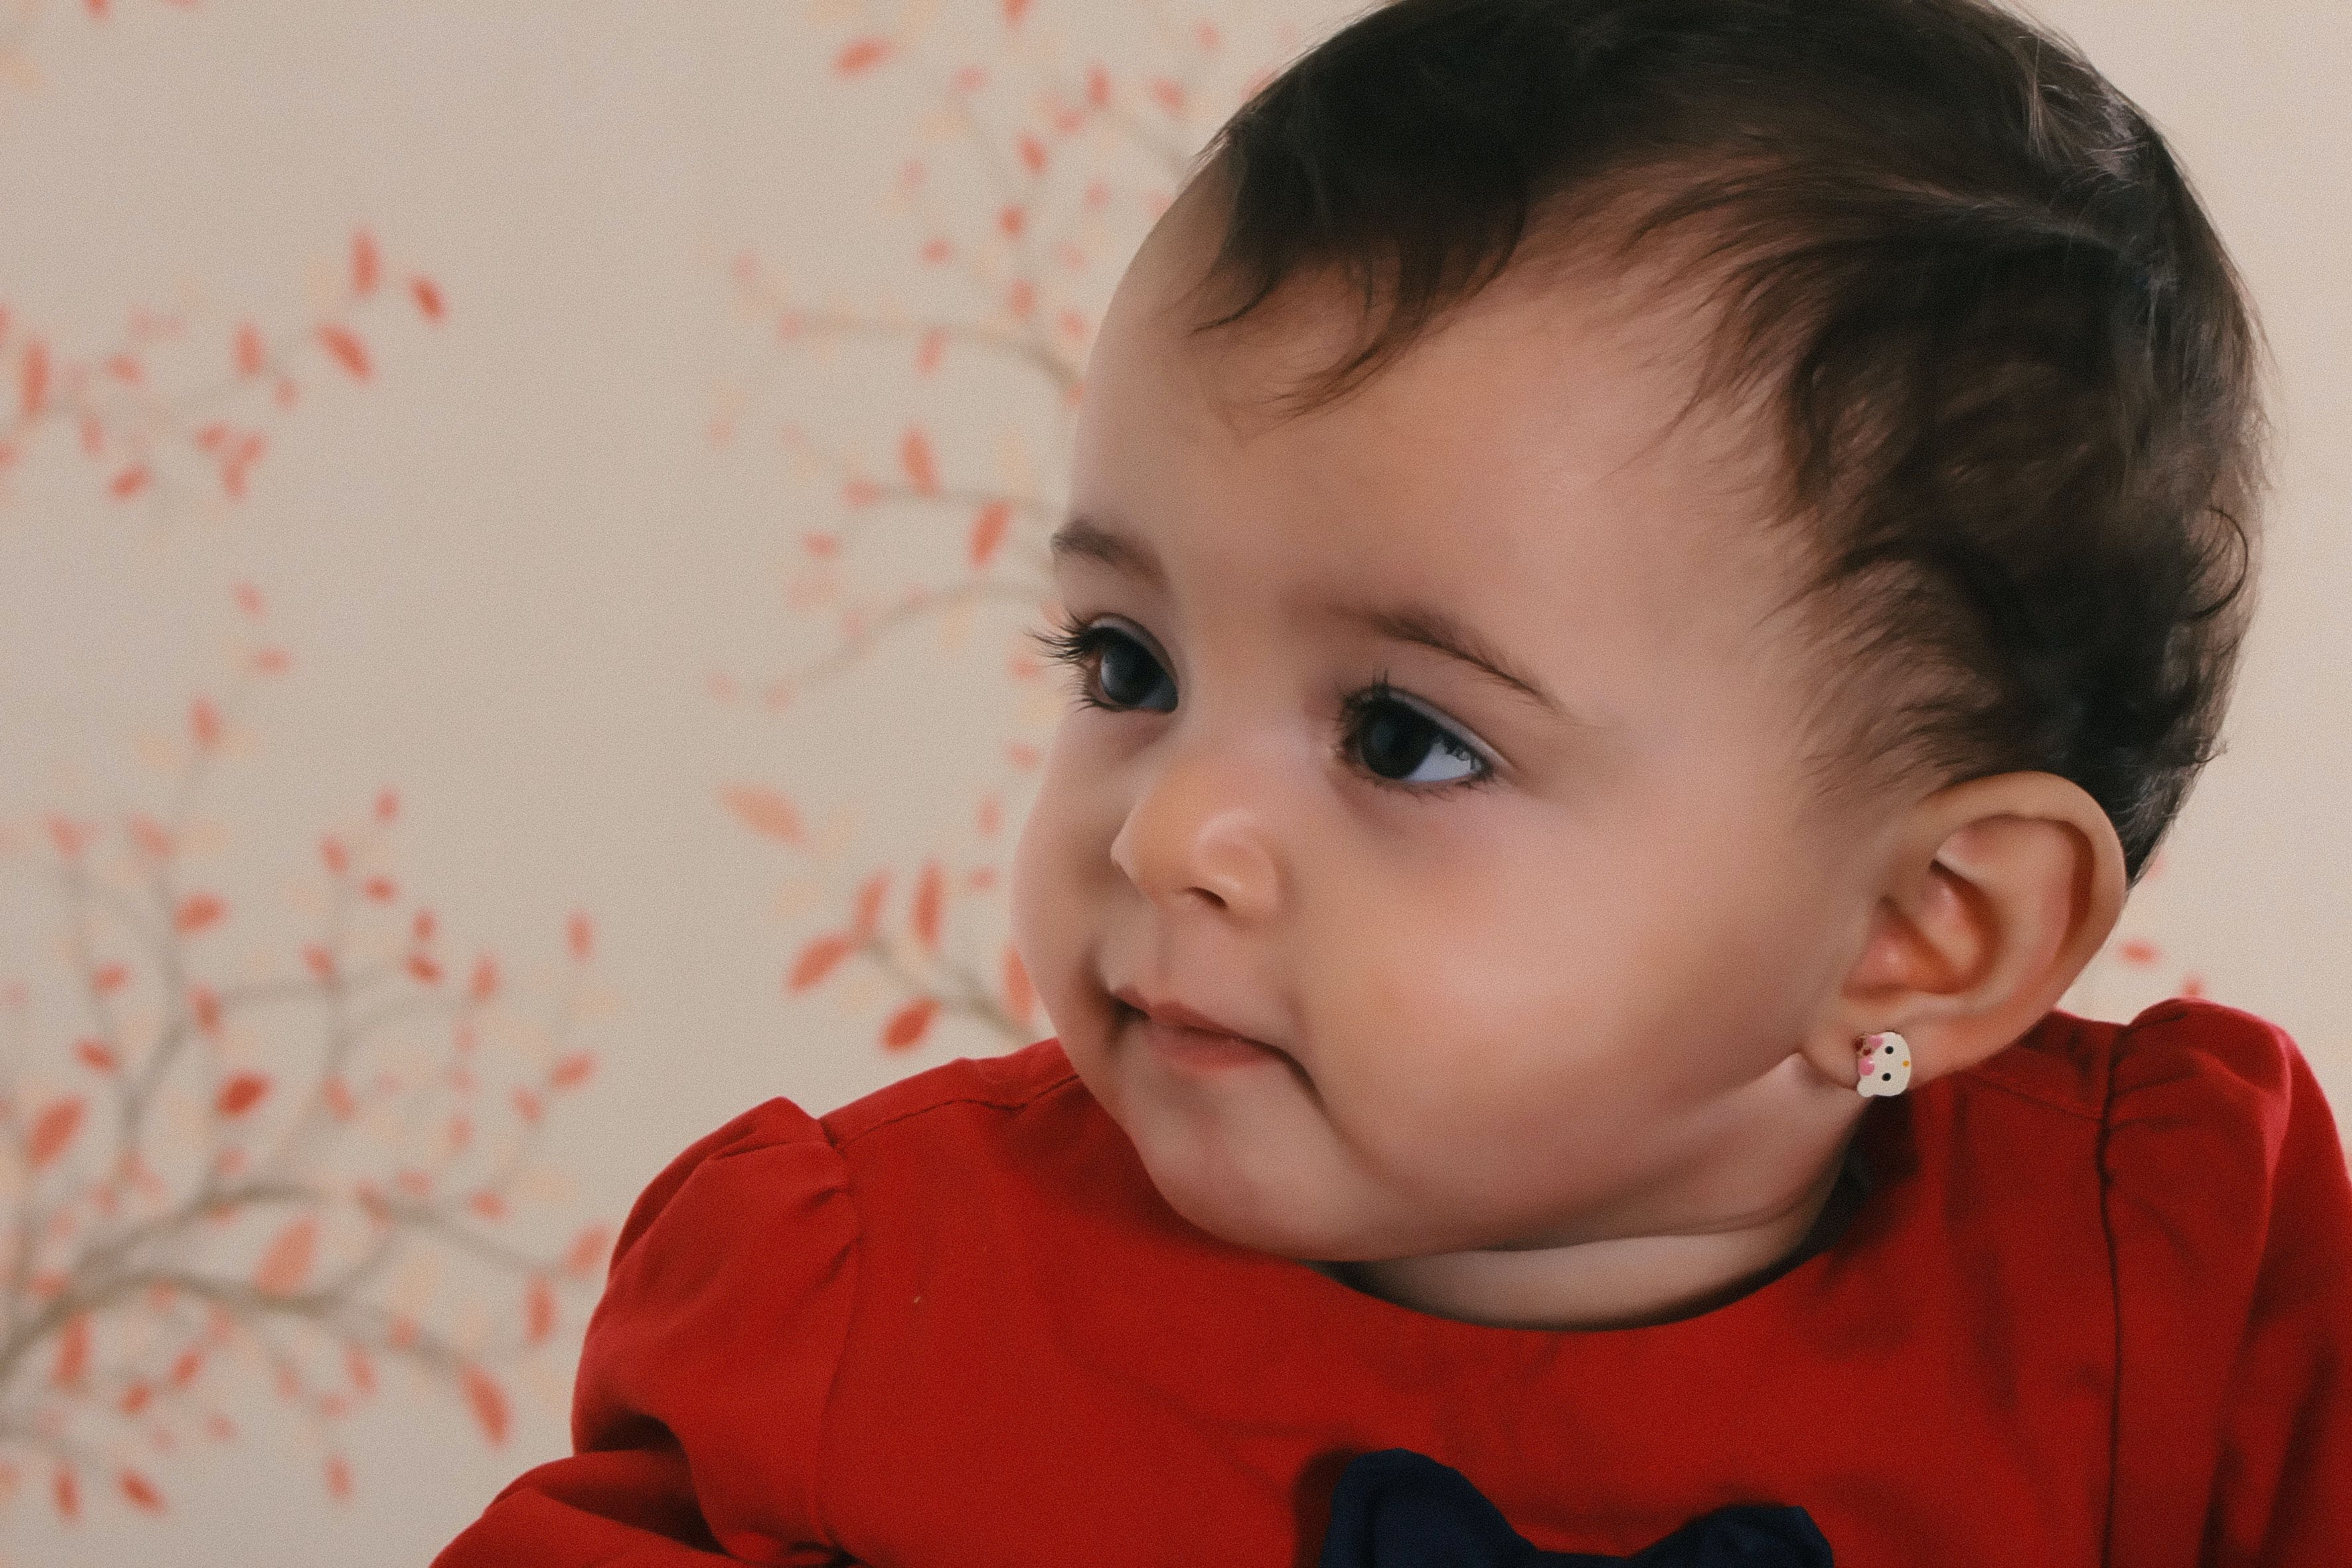 What is baby ear piercing?